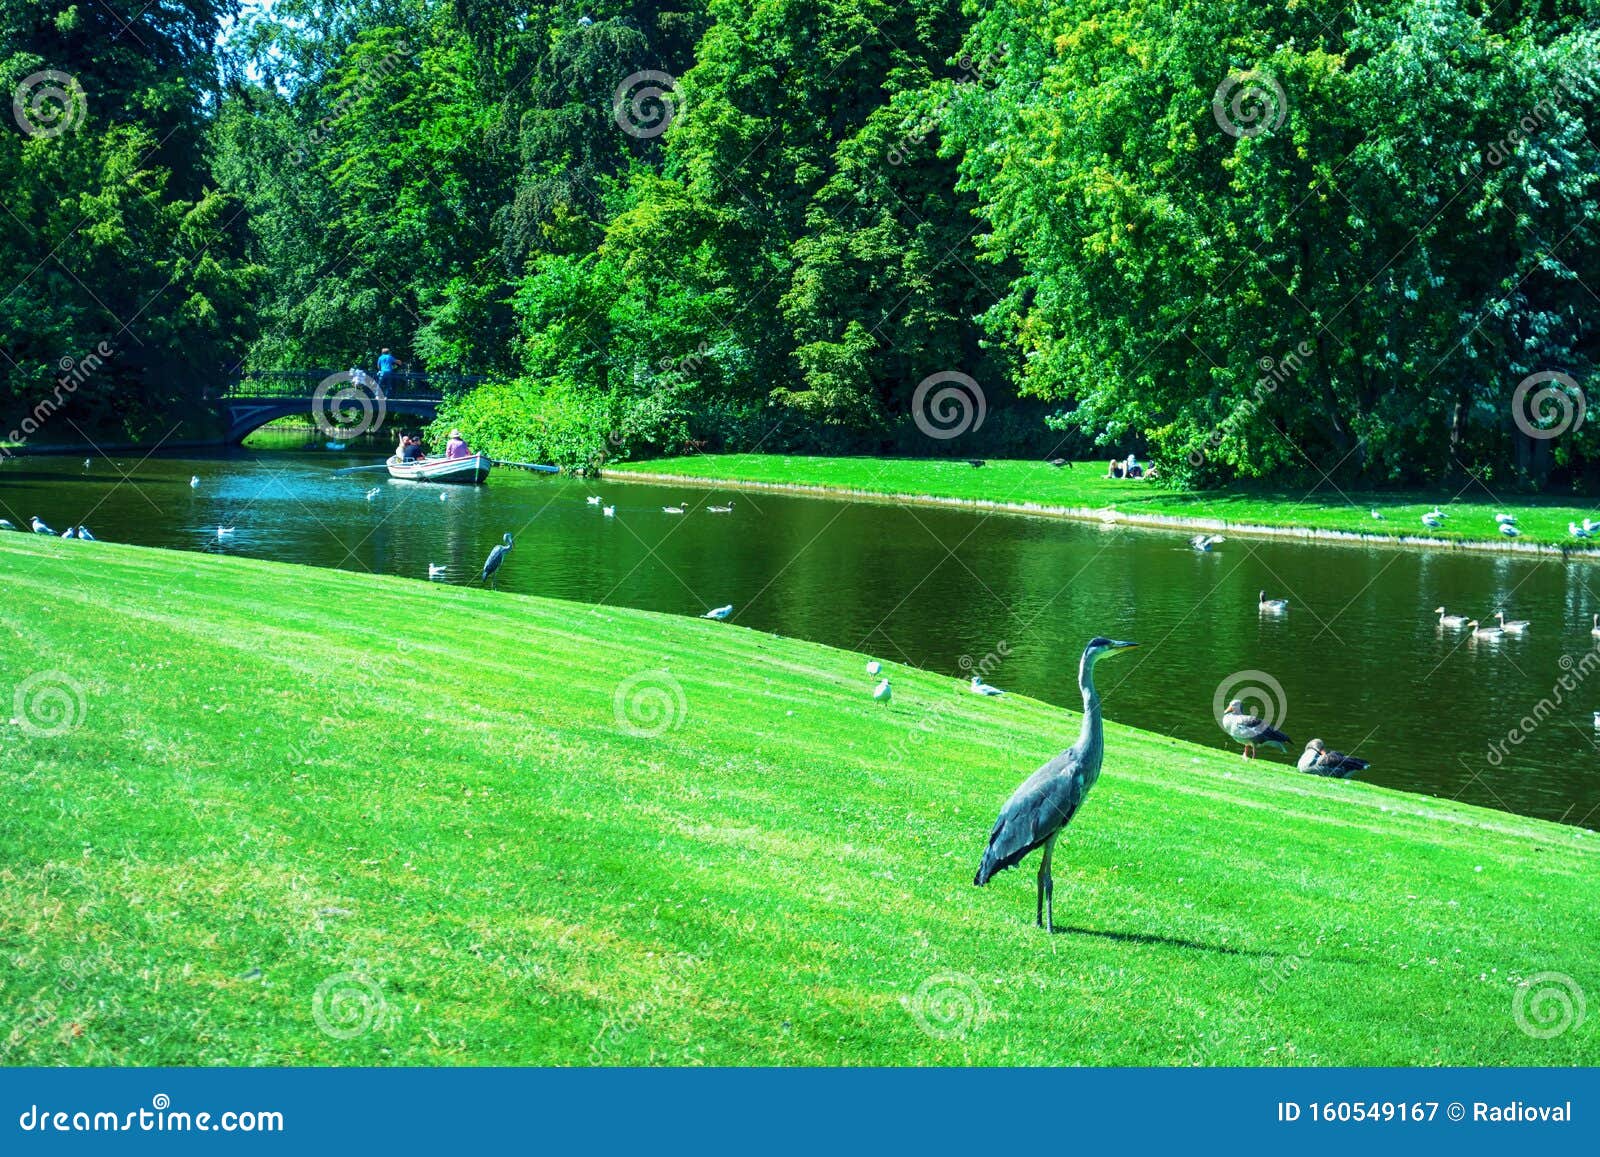 Beautiful Park with a Ducks and Beautiful Nature. Copenhagen. Denmark. Editorial Photography - Image copenhagen: 160549167